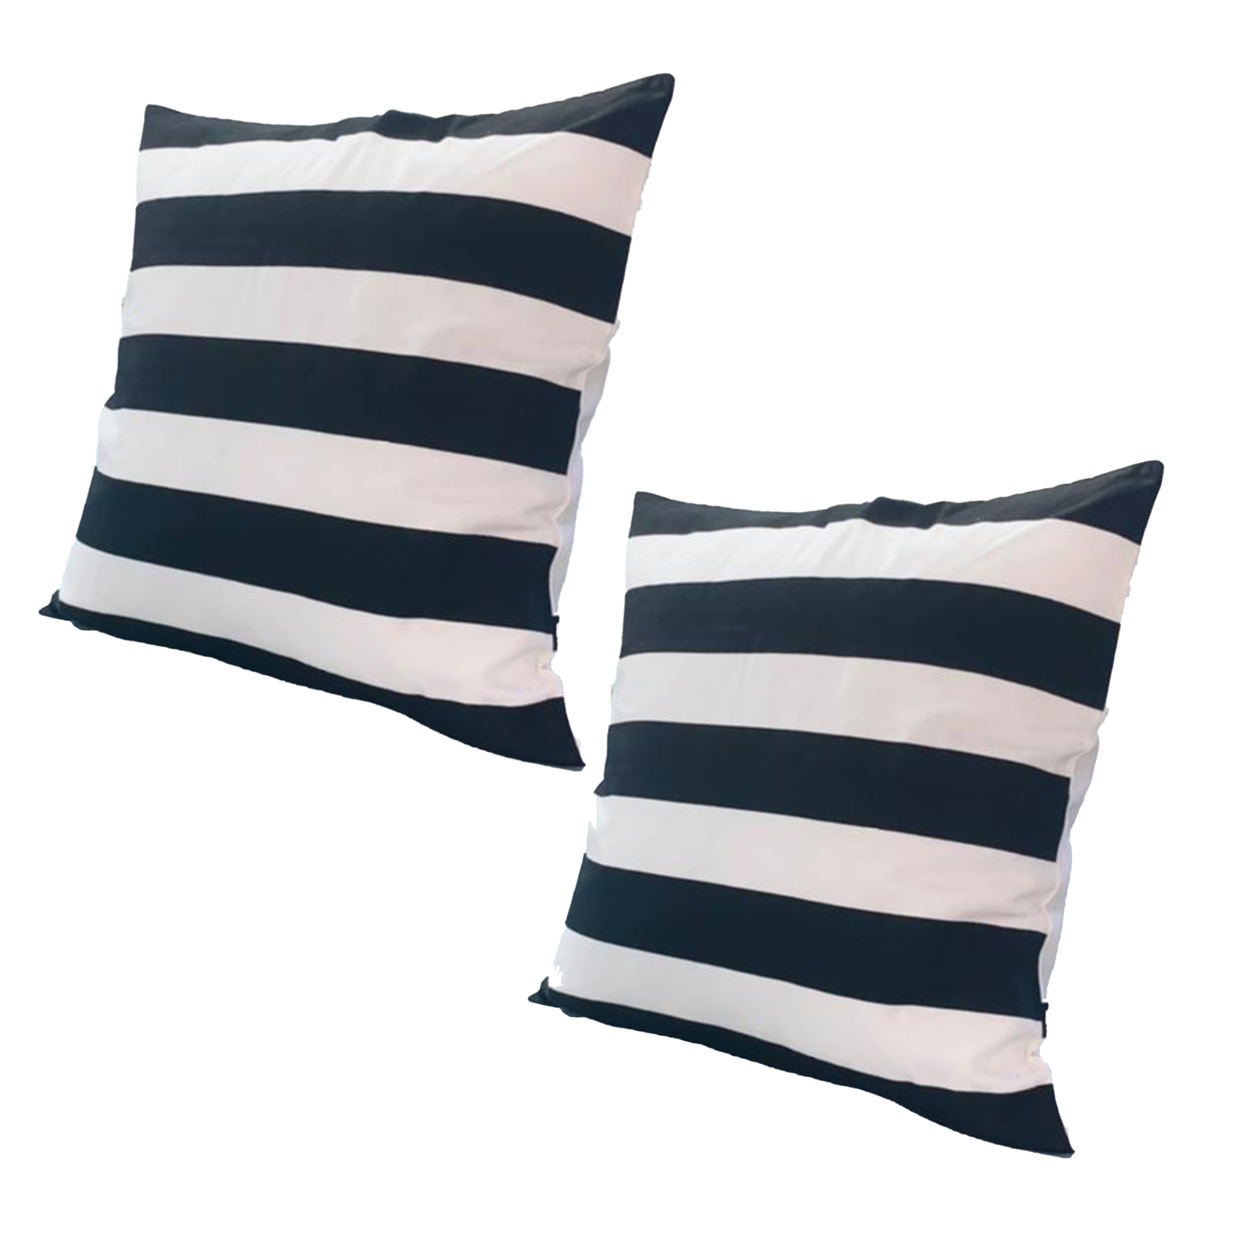 20 X 20 Square Cotton Accent Throw Pillows, Classic Block Stripes, Set Of 2, Black, White